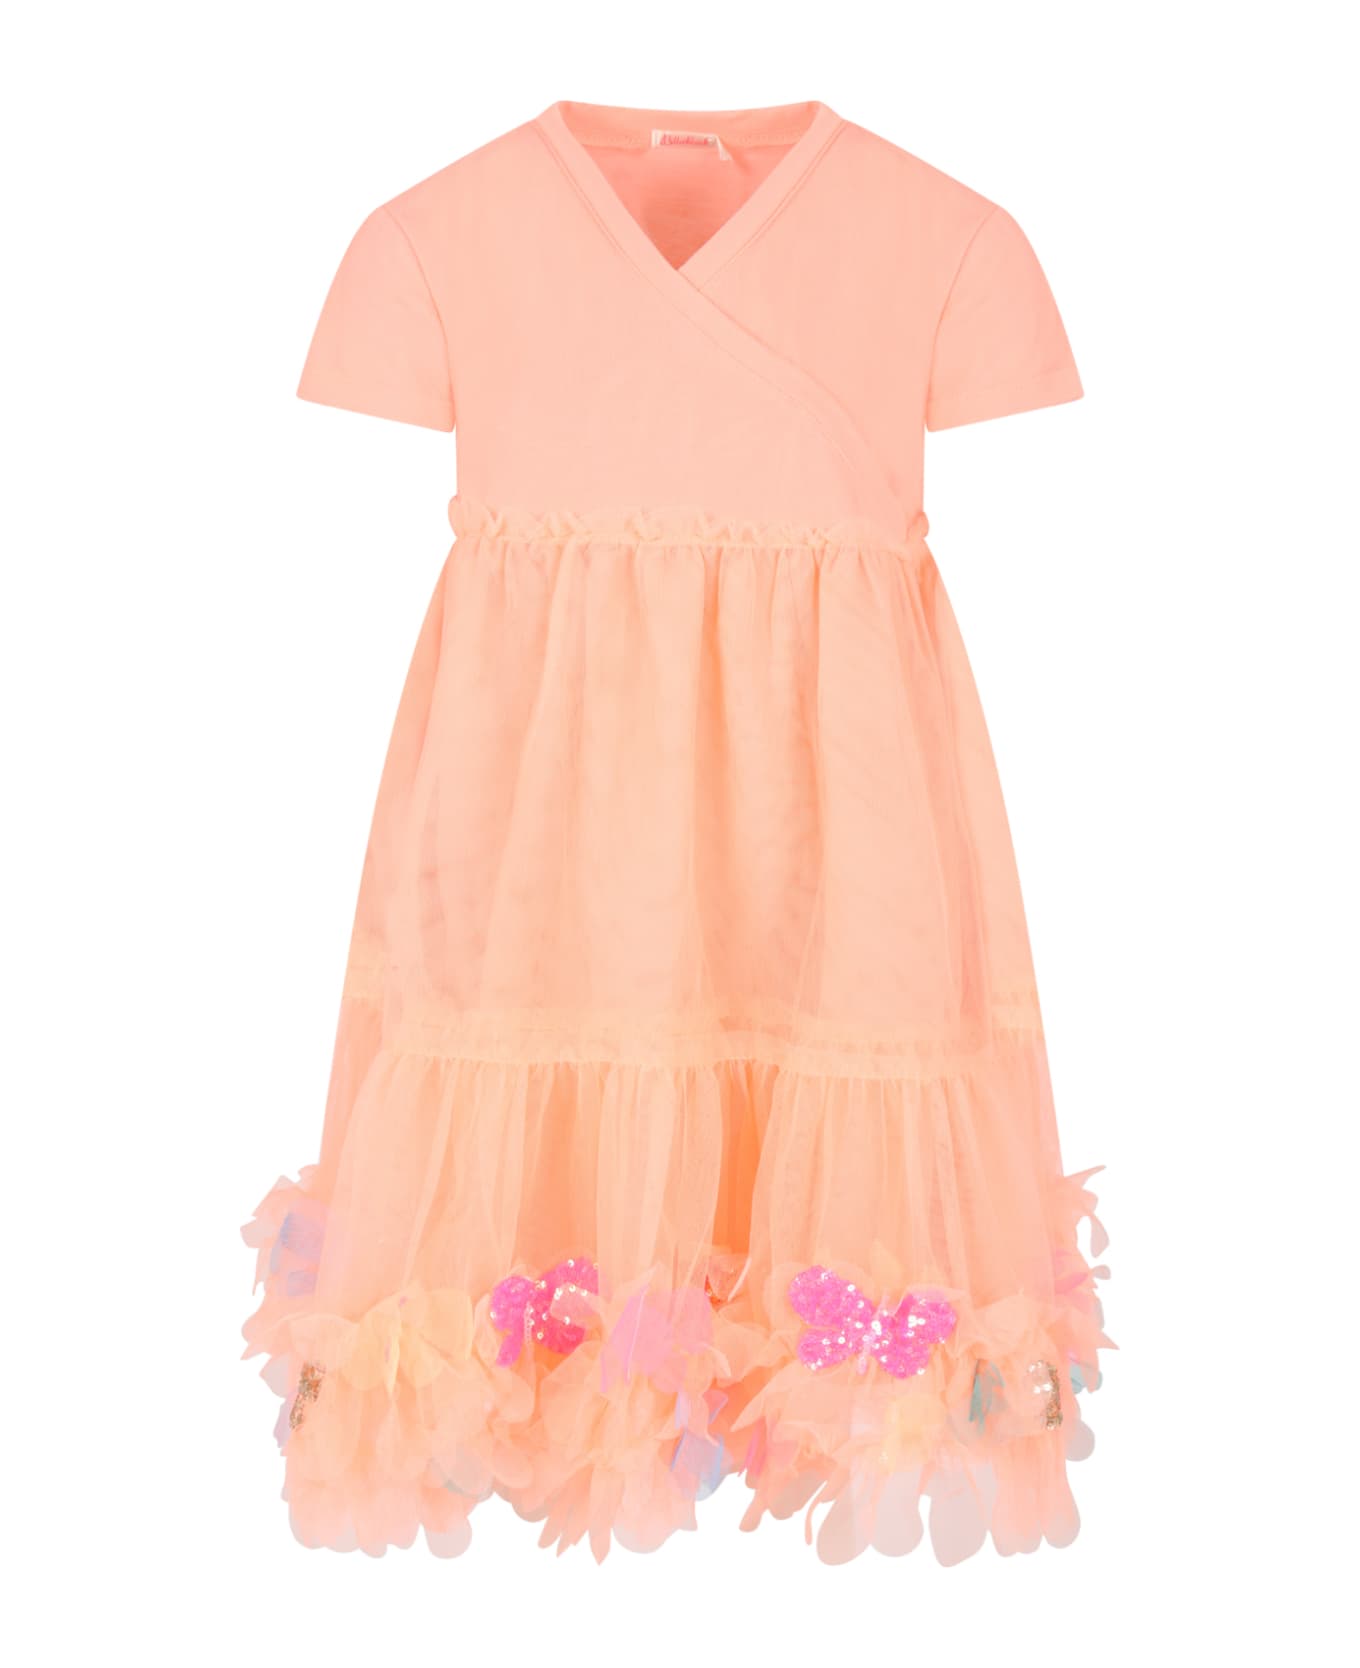 Billieblush Orange Dress For Girl With Butterflies - Orange